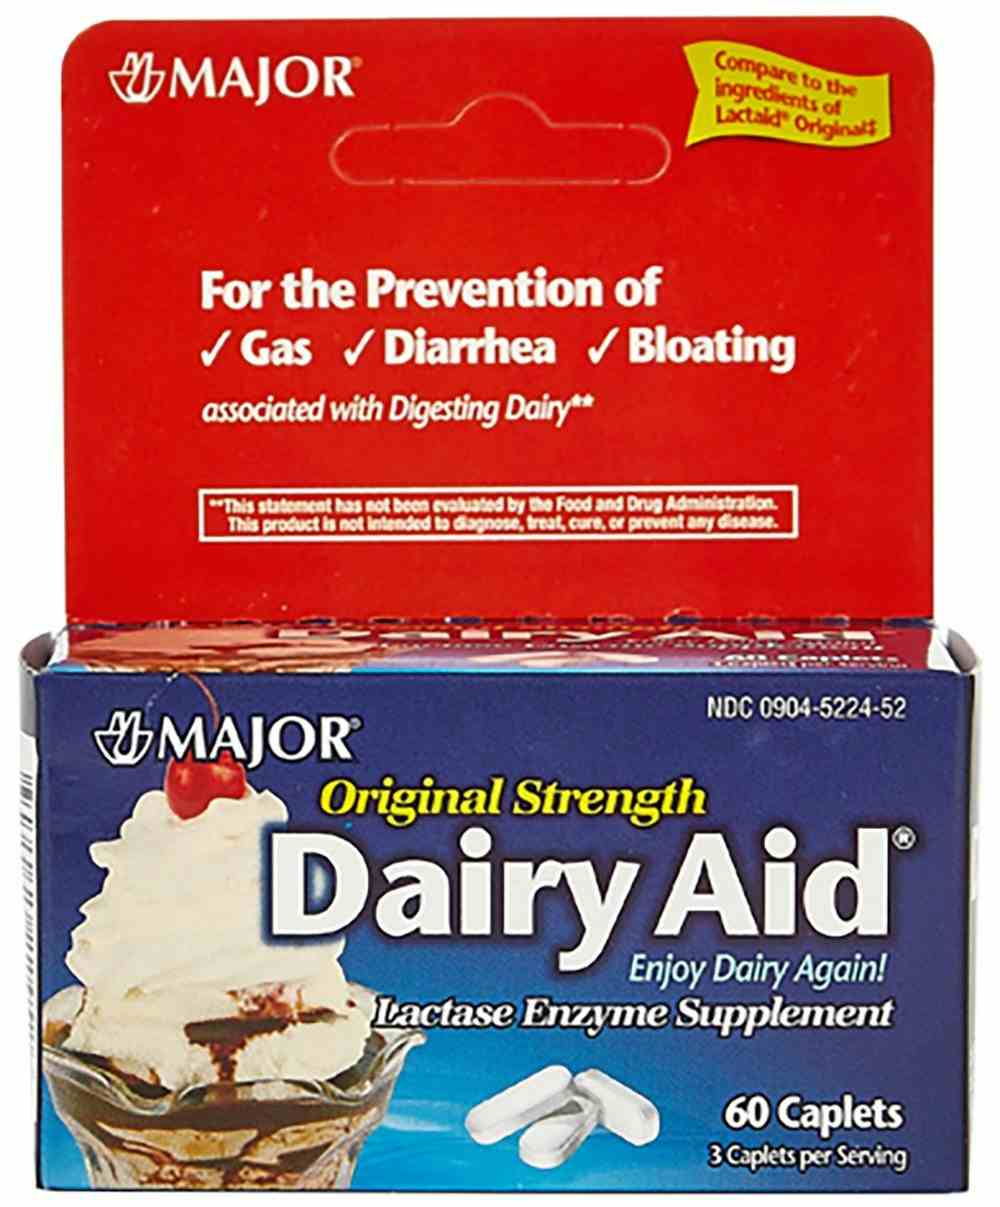 Major Dairy Aid Original Strength Lactase Enzyme Supplement, 3000 IU, 60 Caplets, 00904522452, 1 Bottle